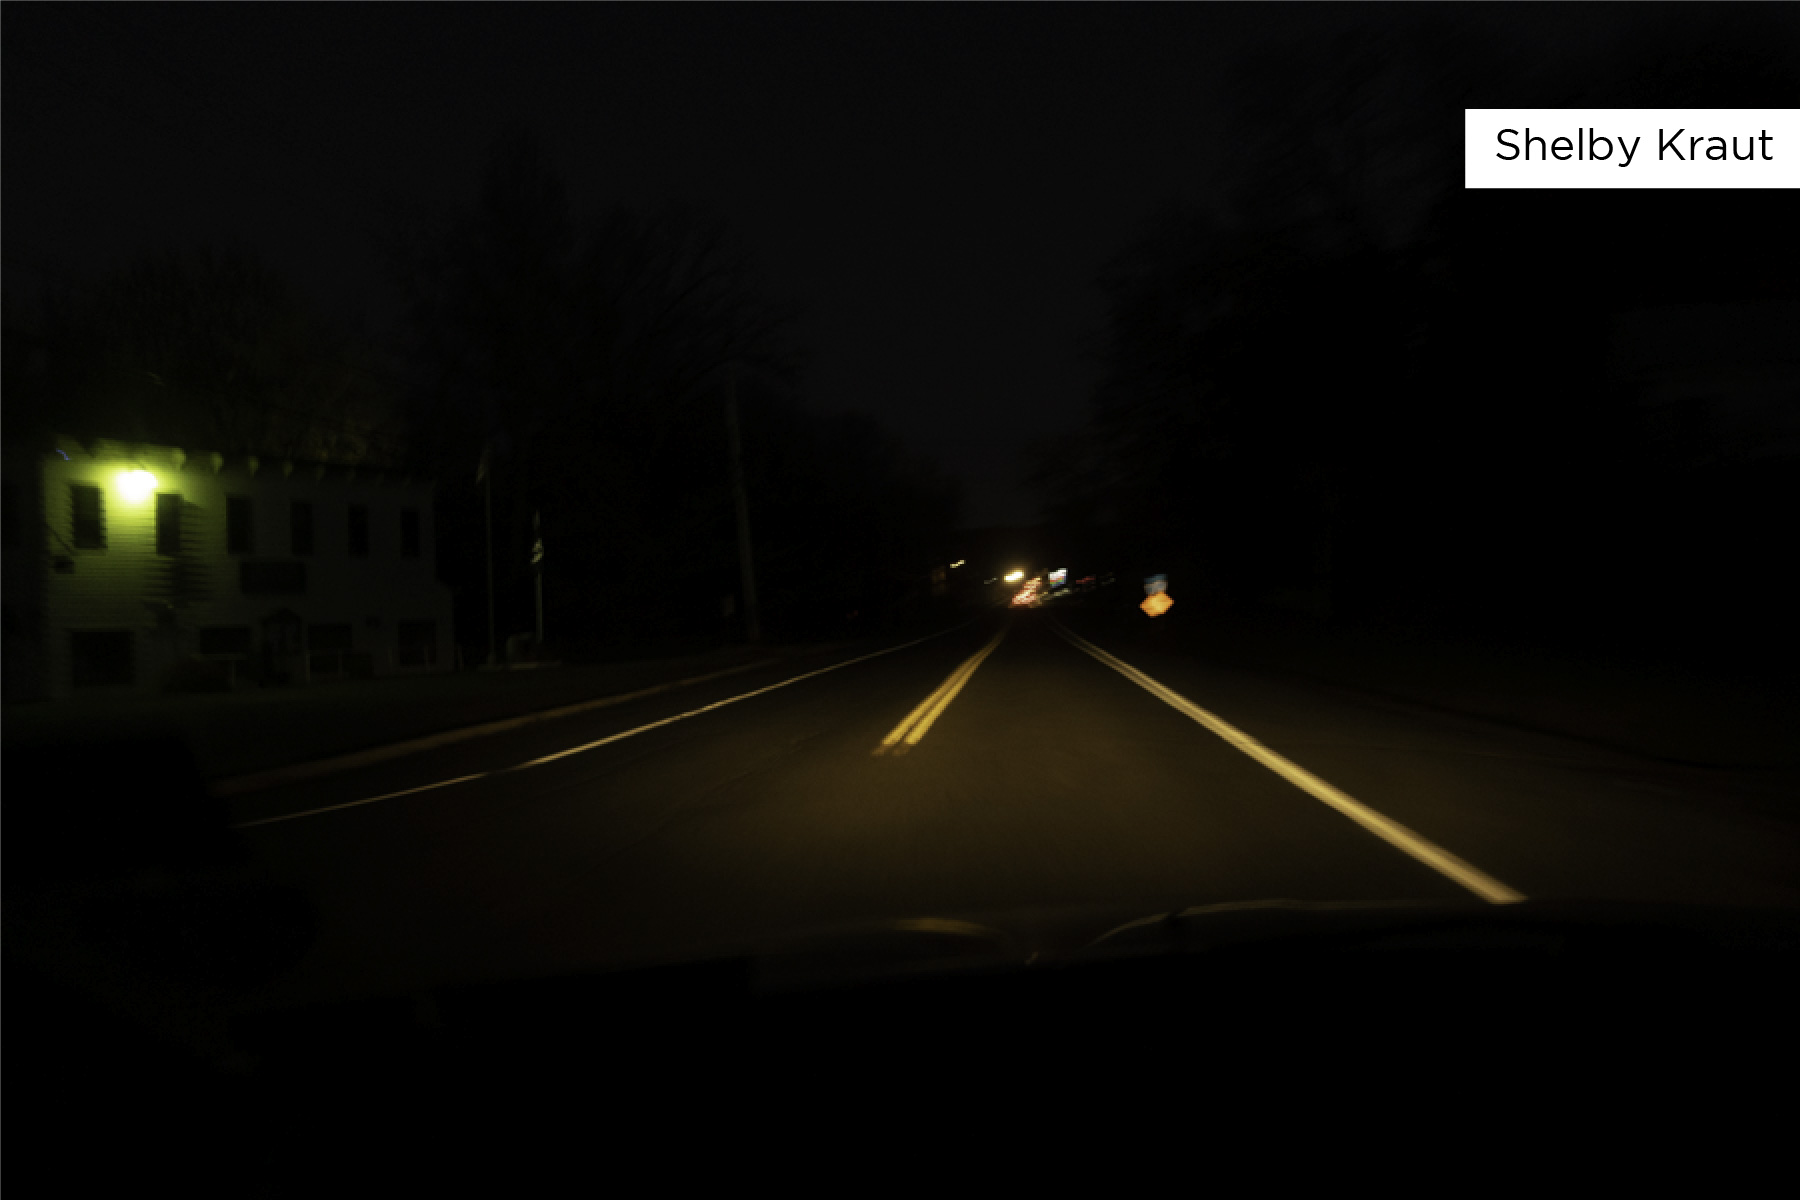 Night scene of a street lit by car headlights